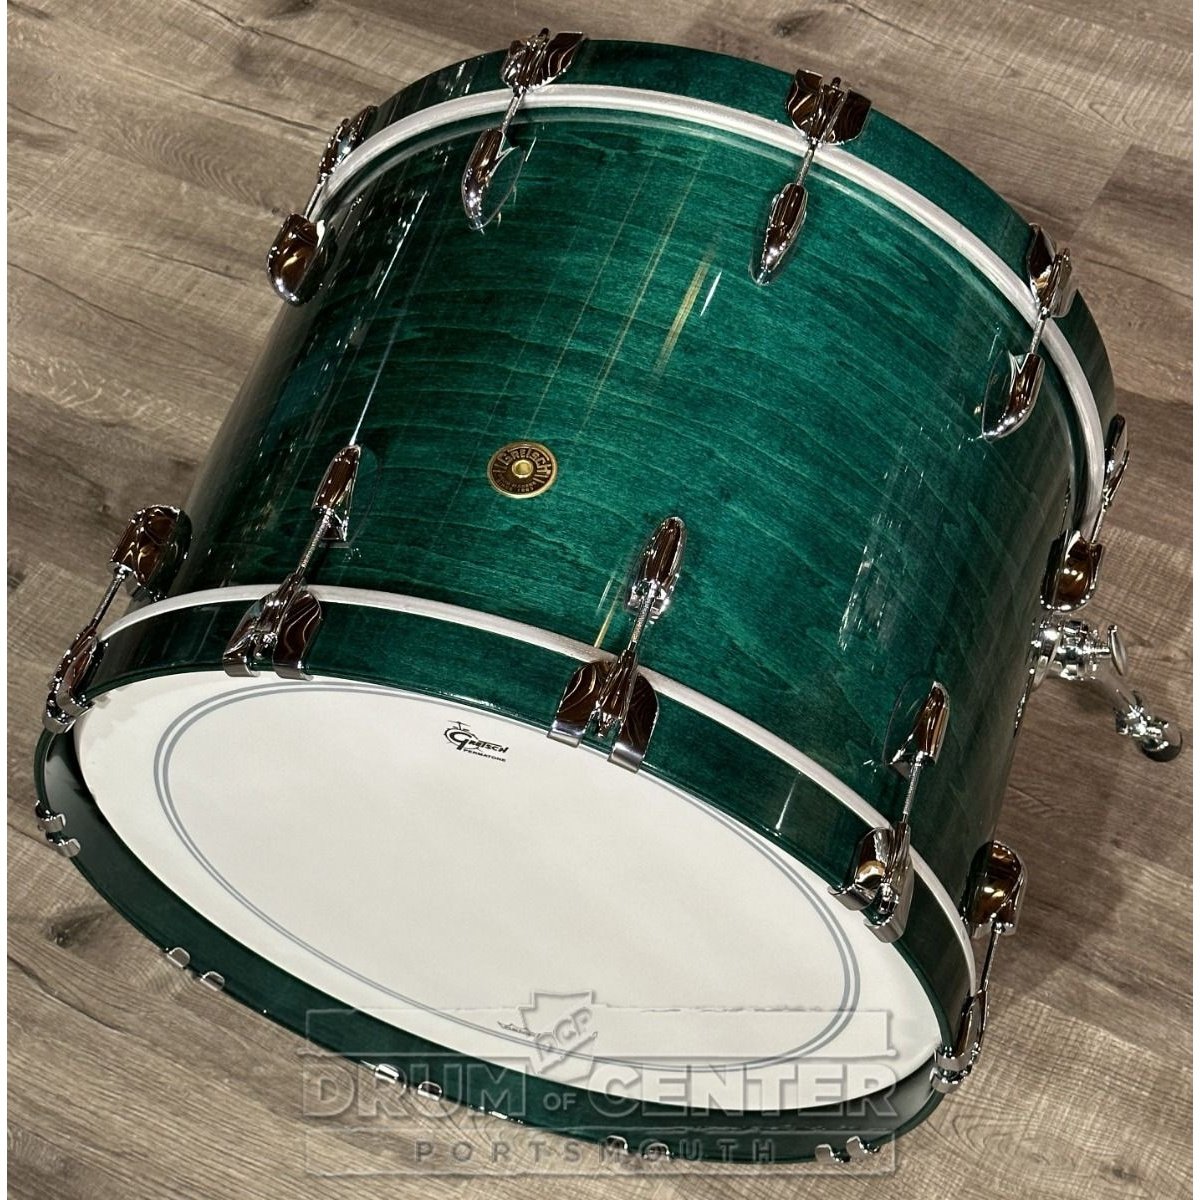 Gretsch USA Custom 5pc Drum Set Caribbean Blue Gloss